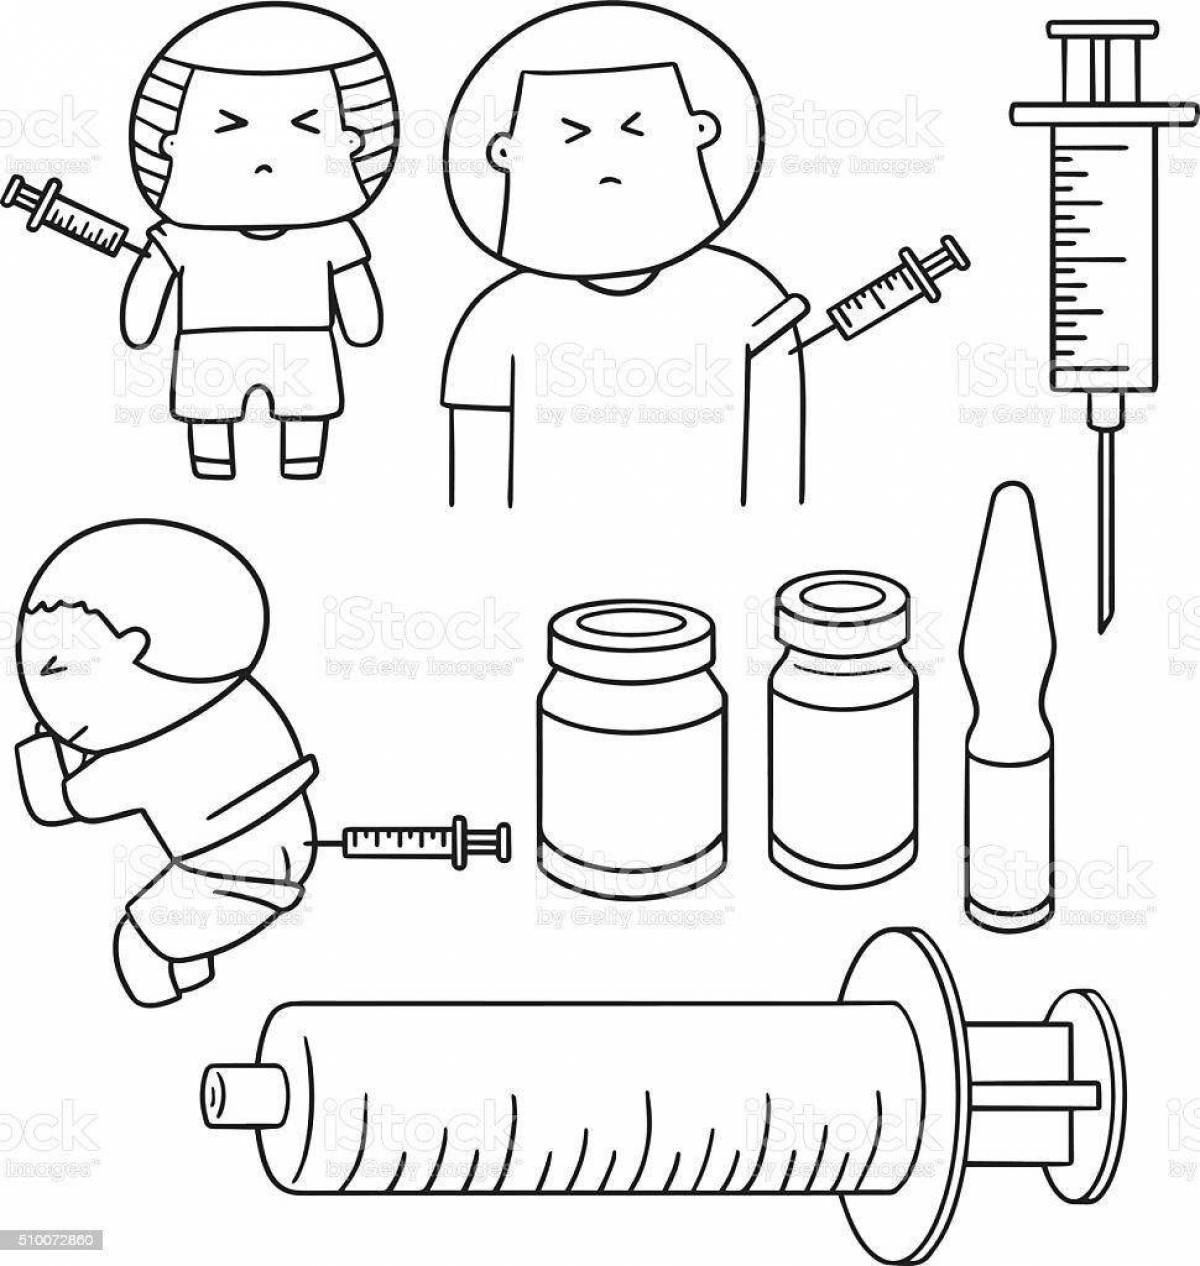 Fascinating syringe coloring page for kids